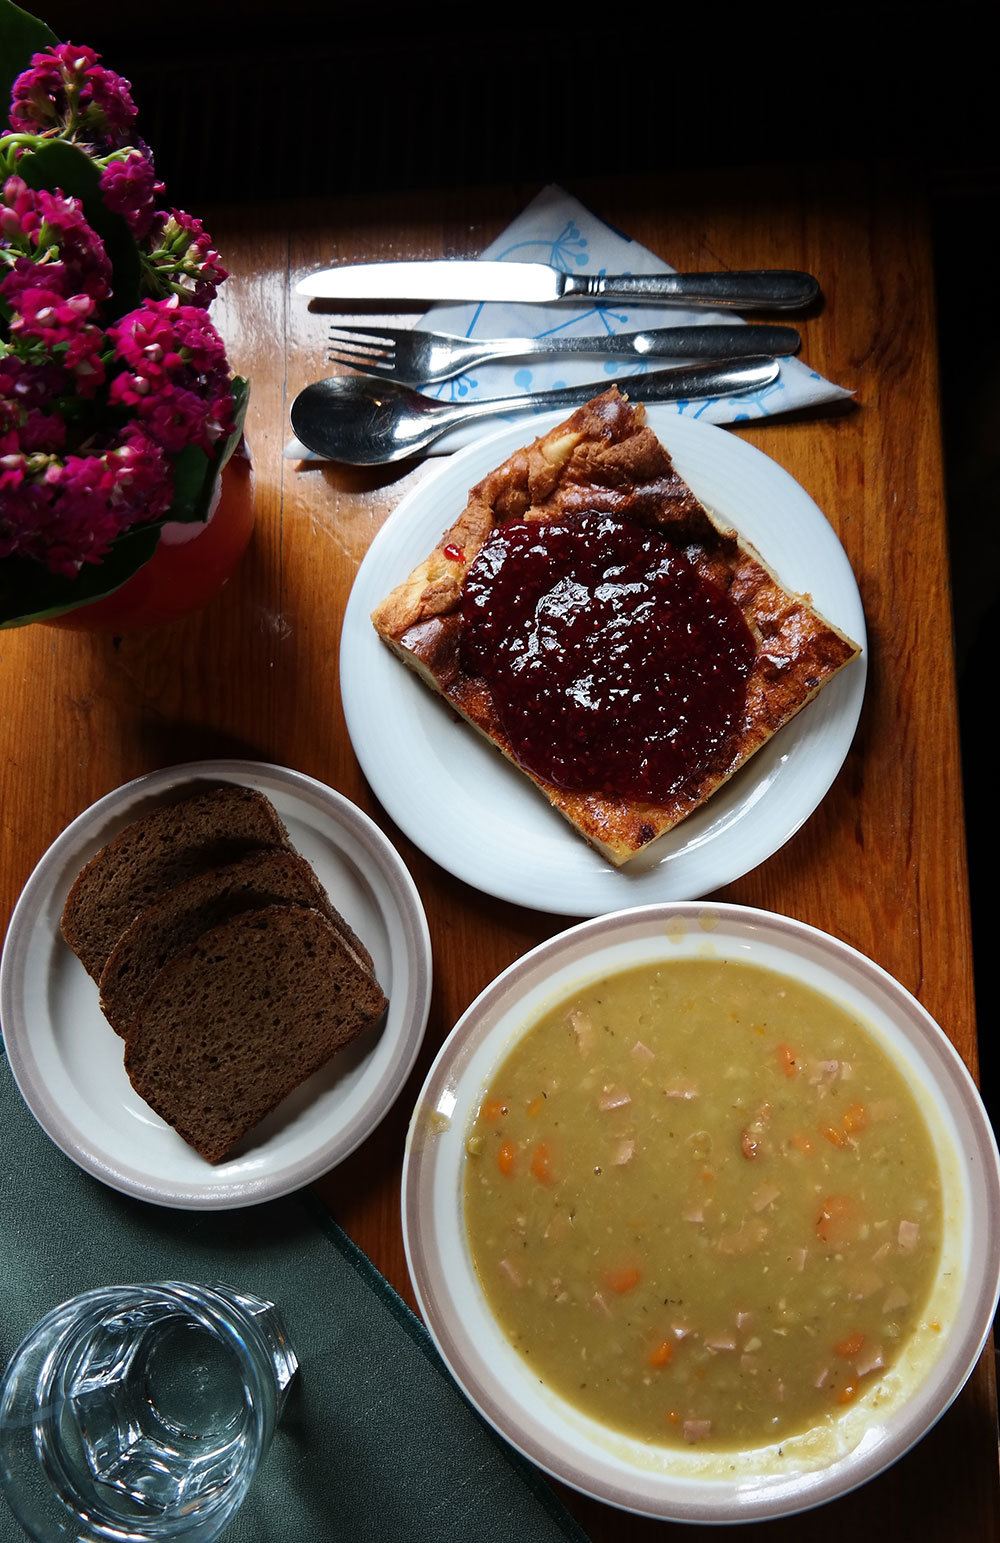 Pea soup and pancakes in Turku, Finland. Travel photo by Katja Presnal | @skimbaco